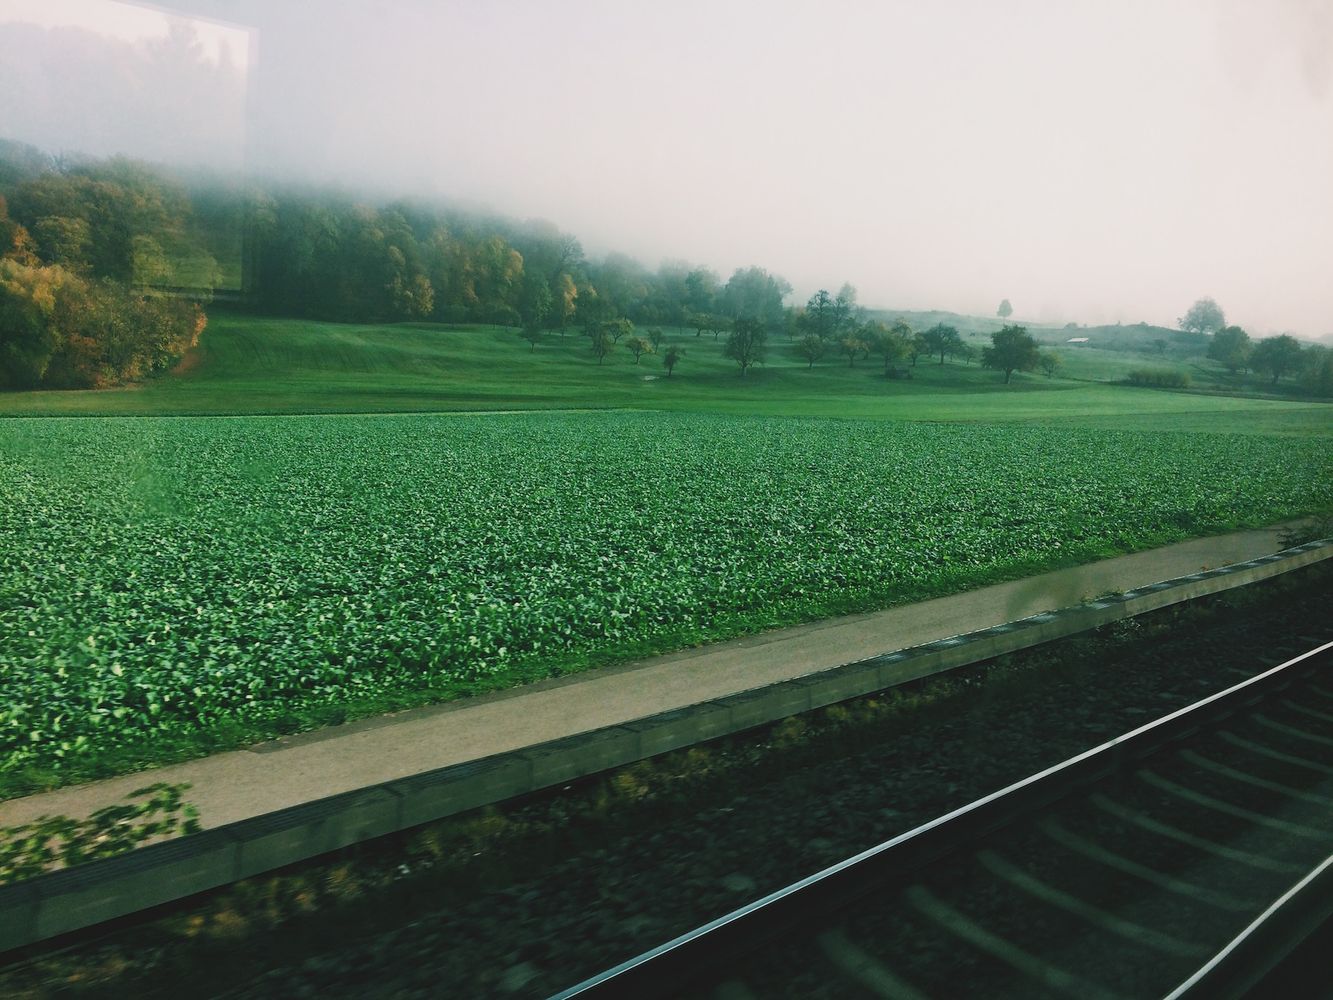 Train through Southern Germany to Ulm